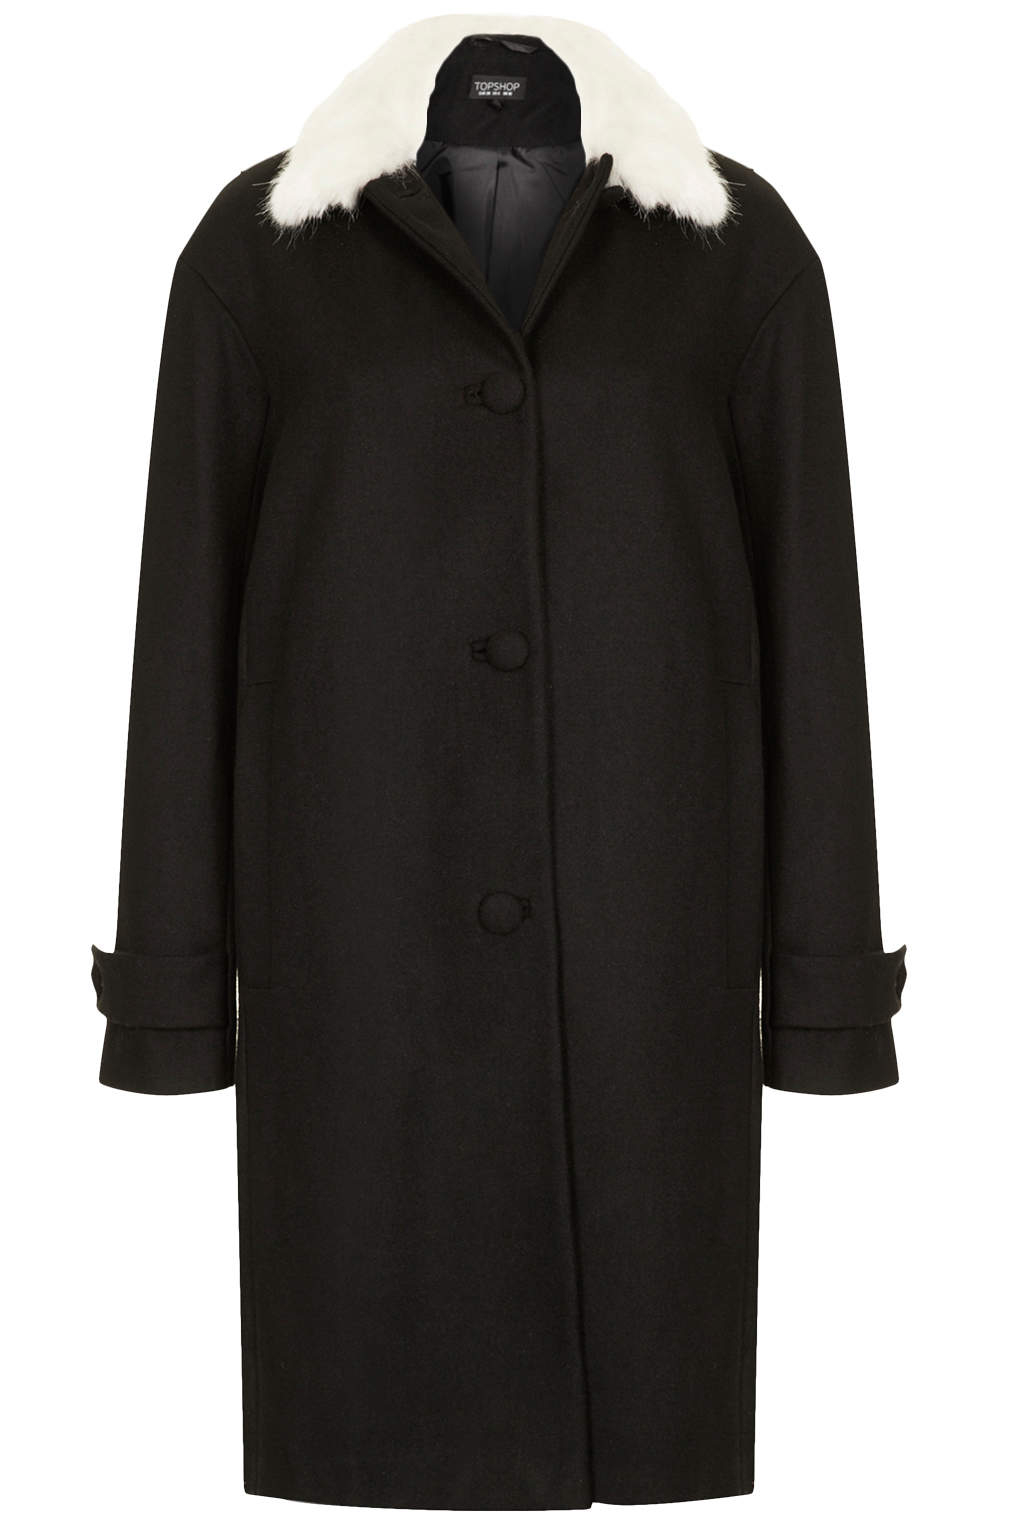 Lyst - Topshop Fur Collar Coat in Black